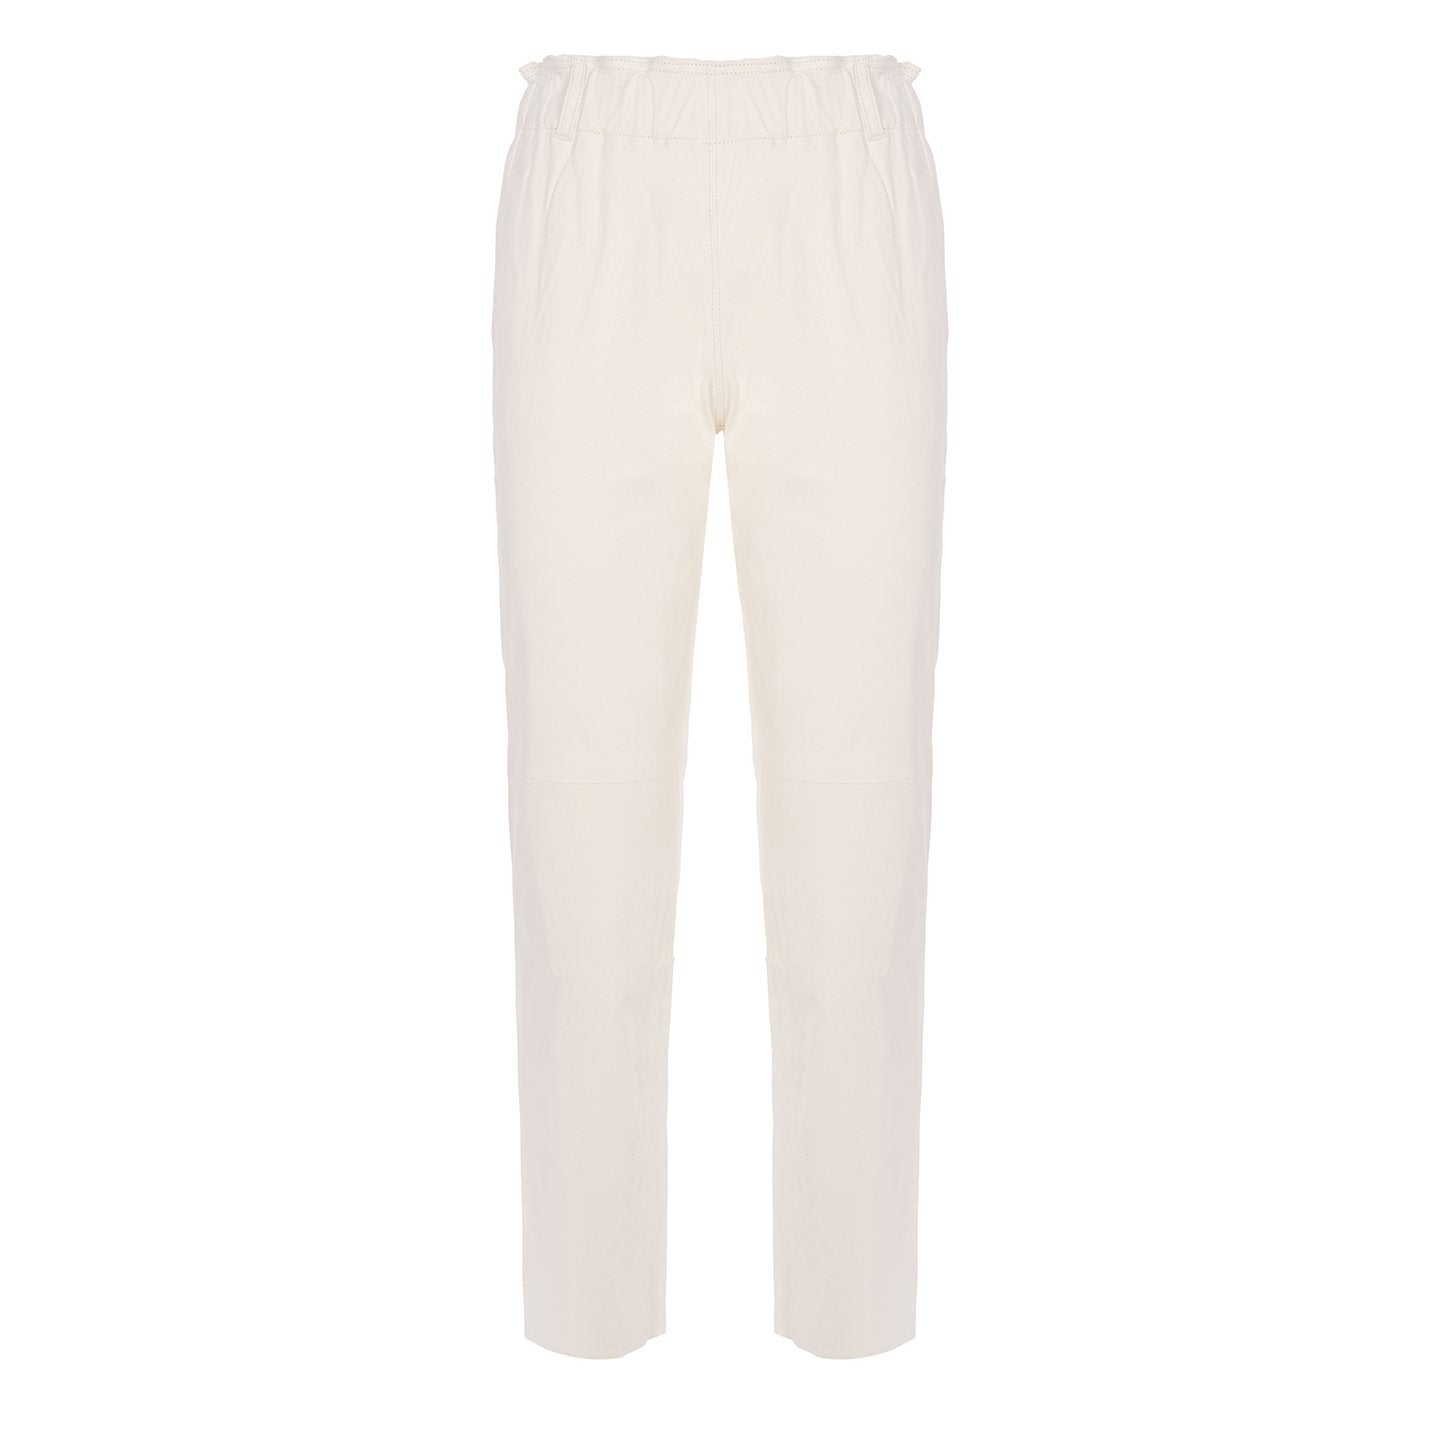 White leather jogger pants by Mon&Pau